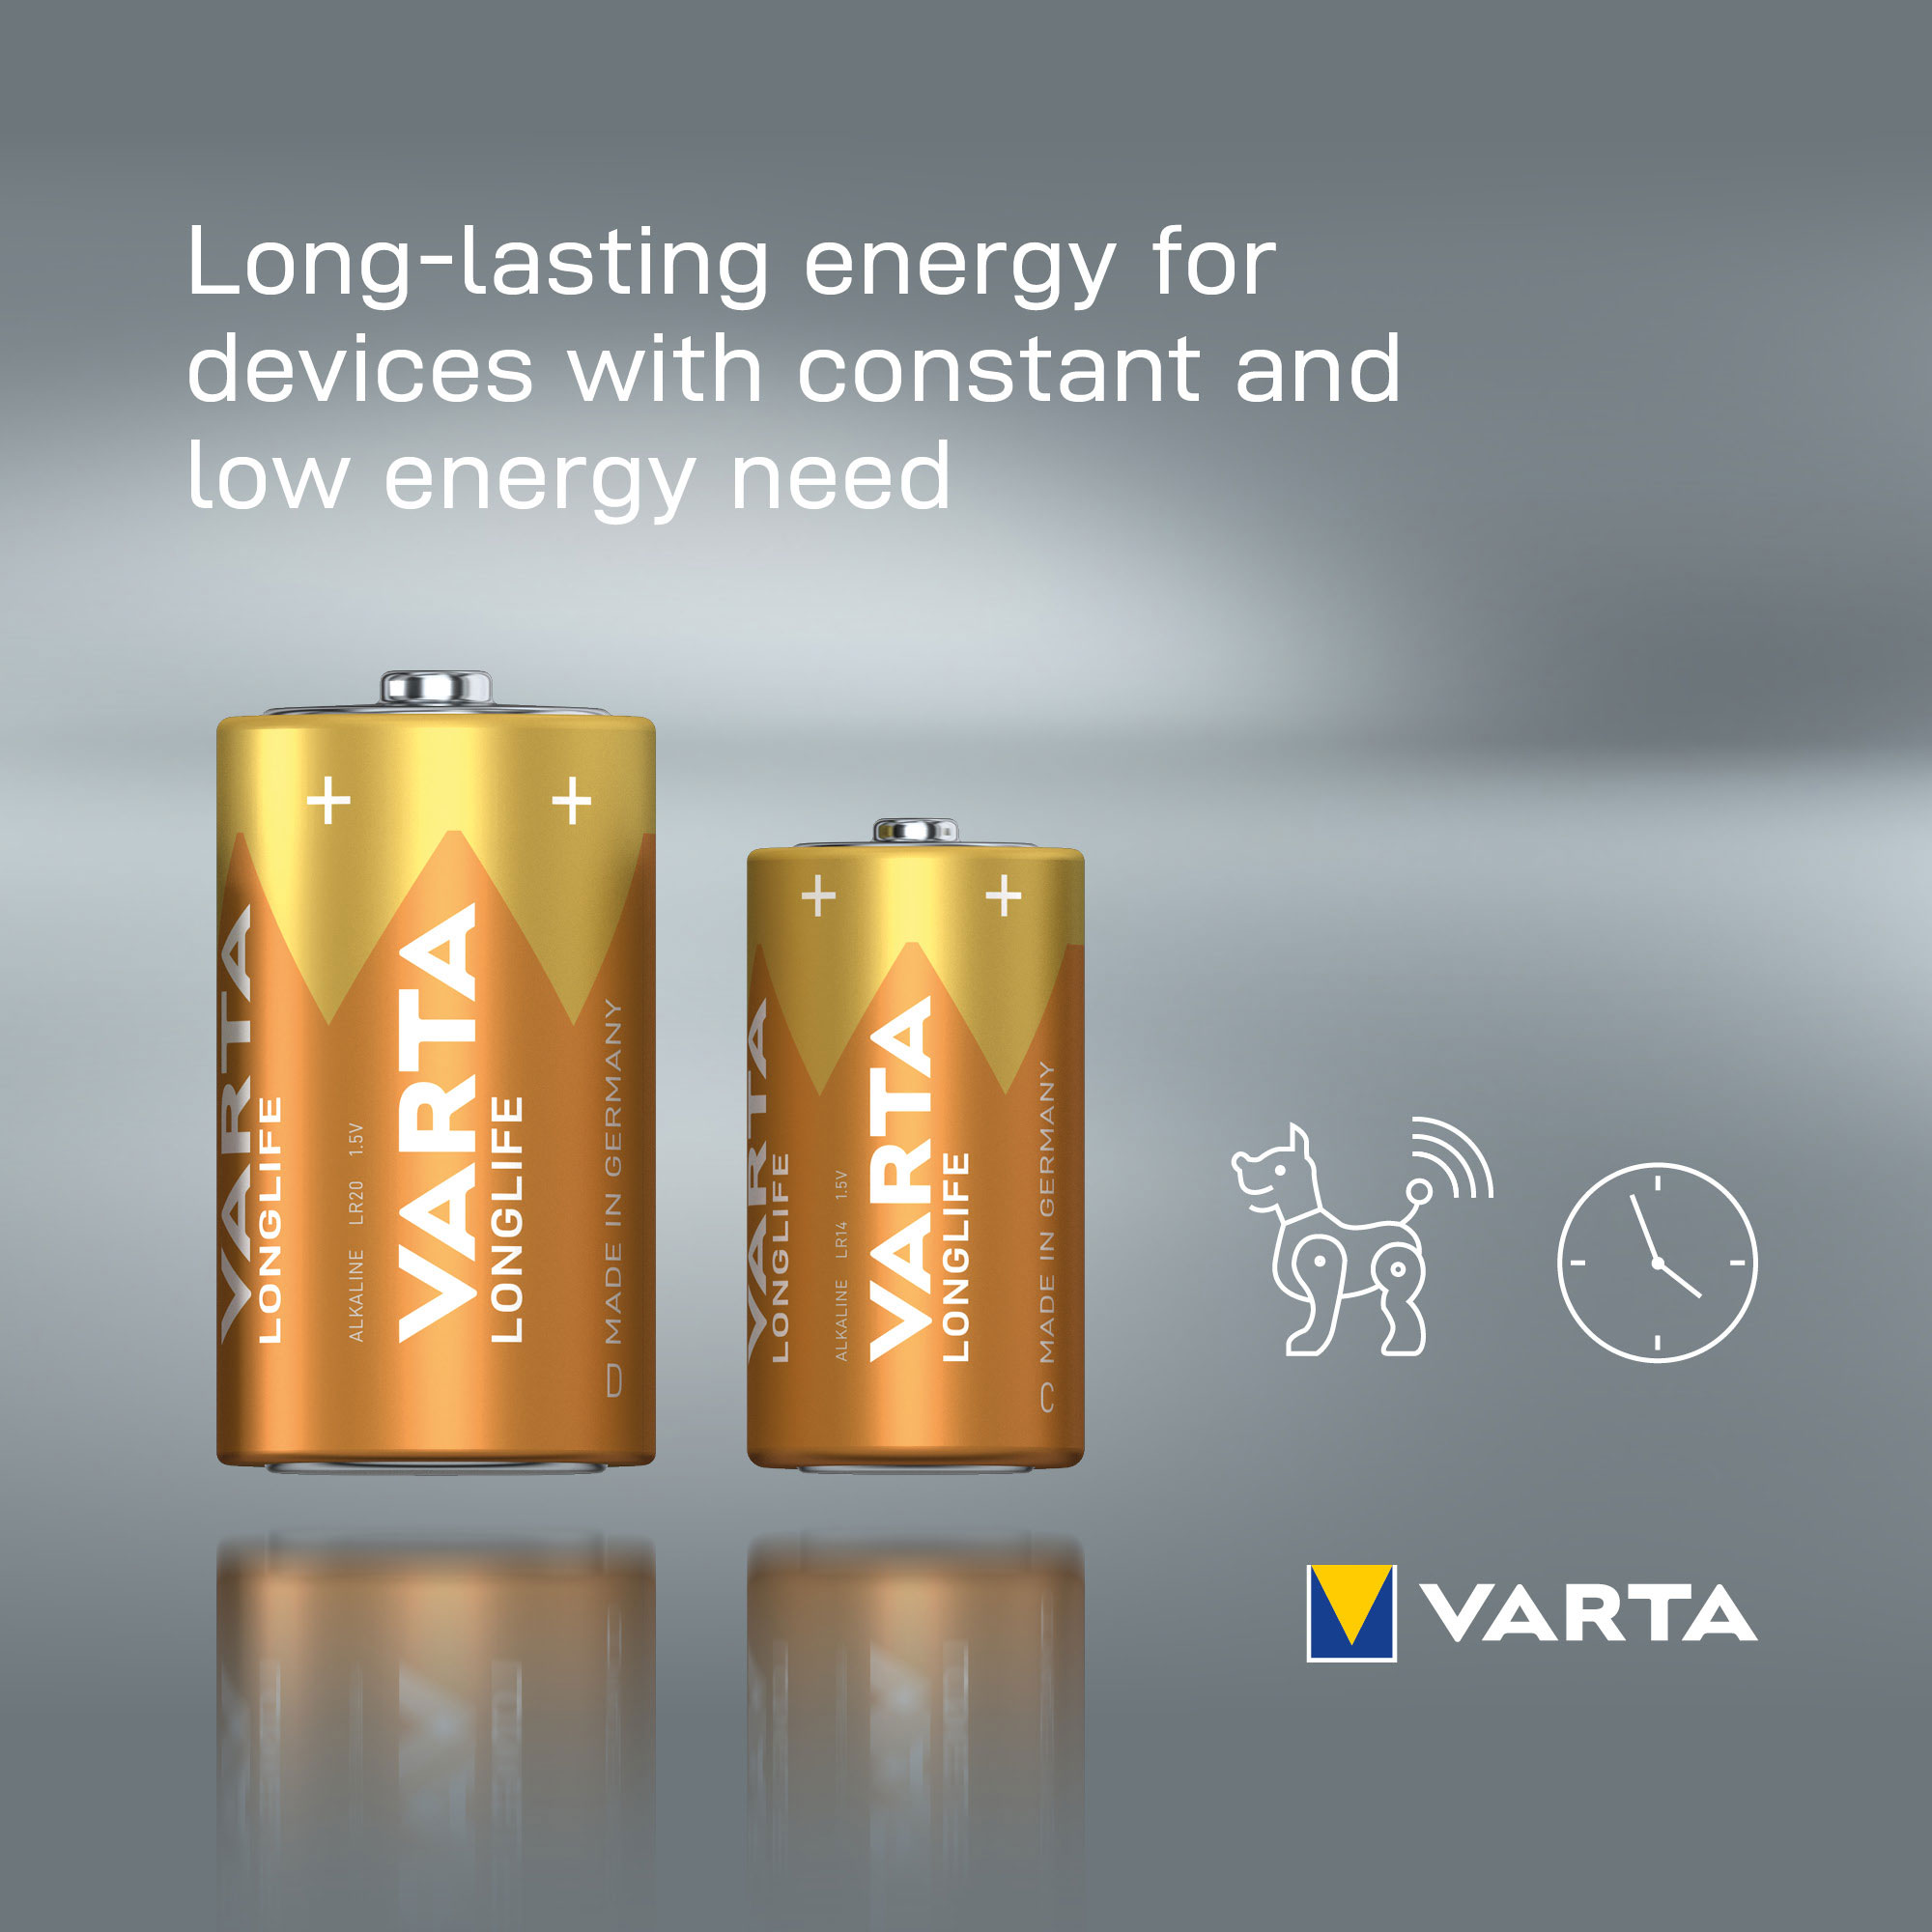 VARTA Batterie Alkaline, Mono, D, LR20, 1.5V